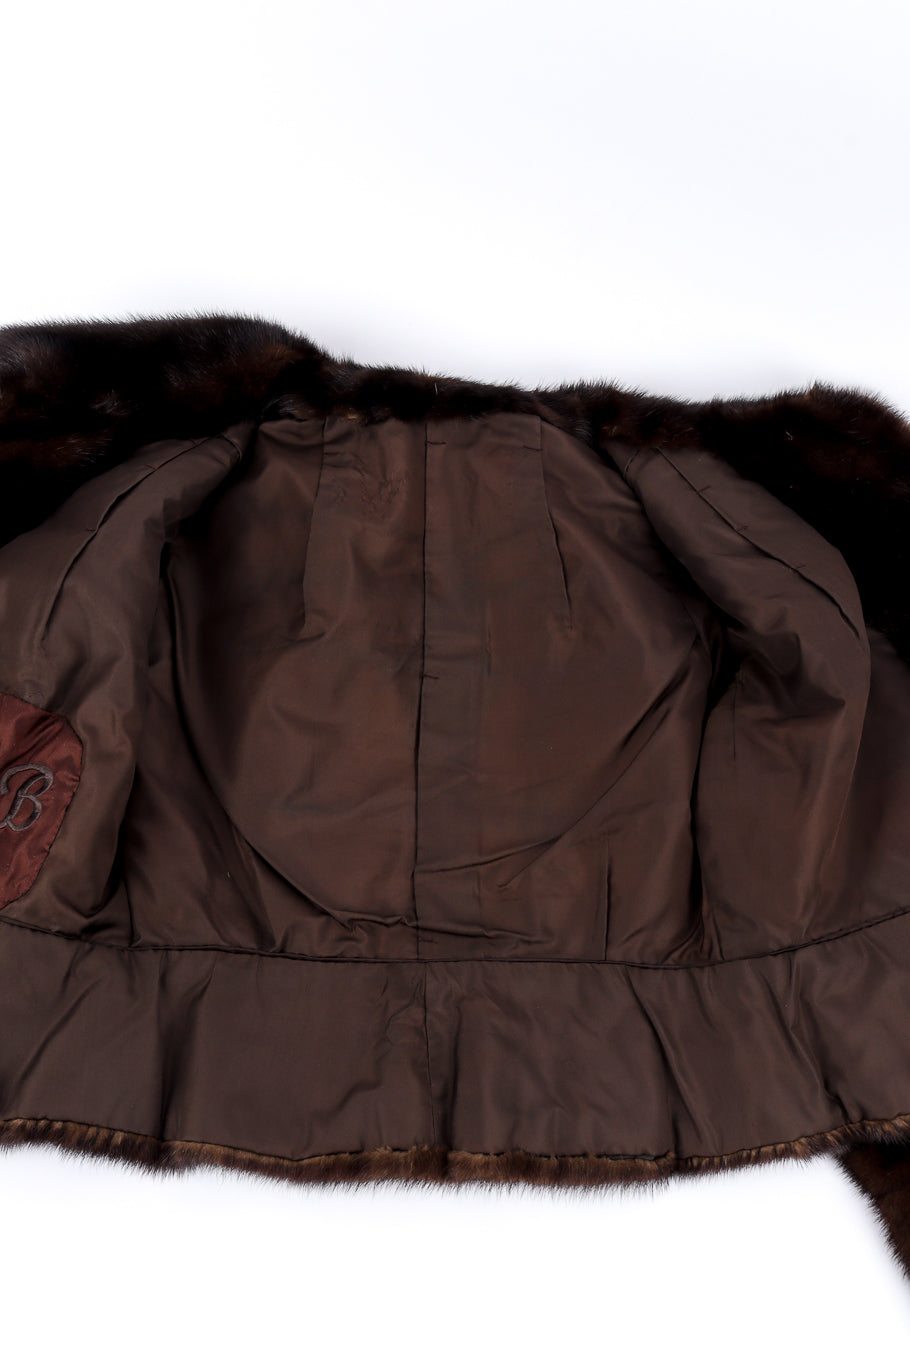 Vintage Cropped Fur Jacket view of lining @recessla